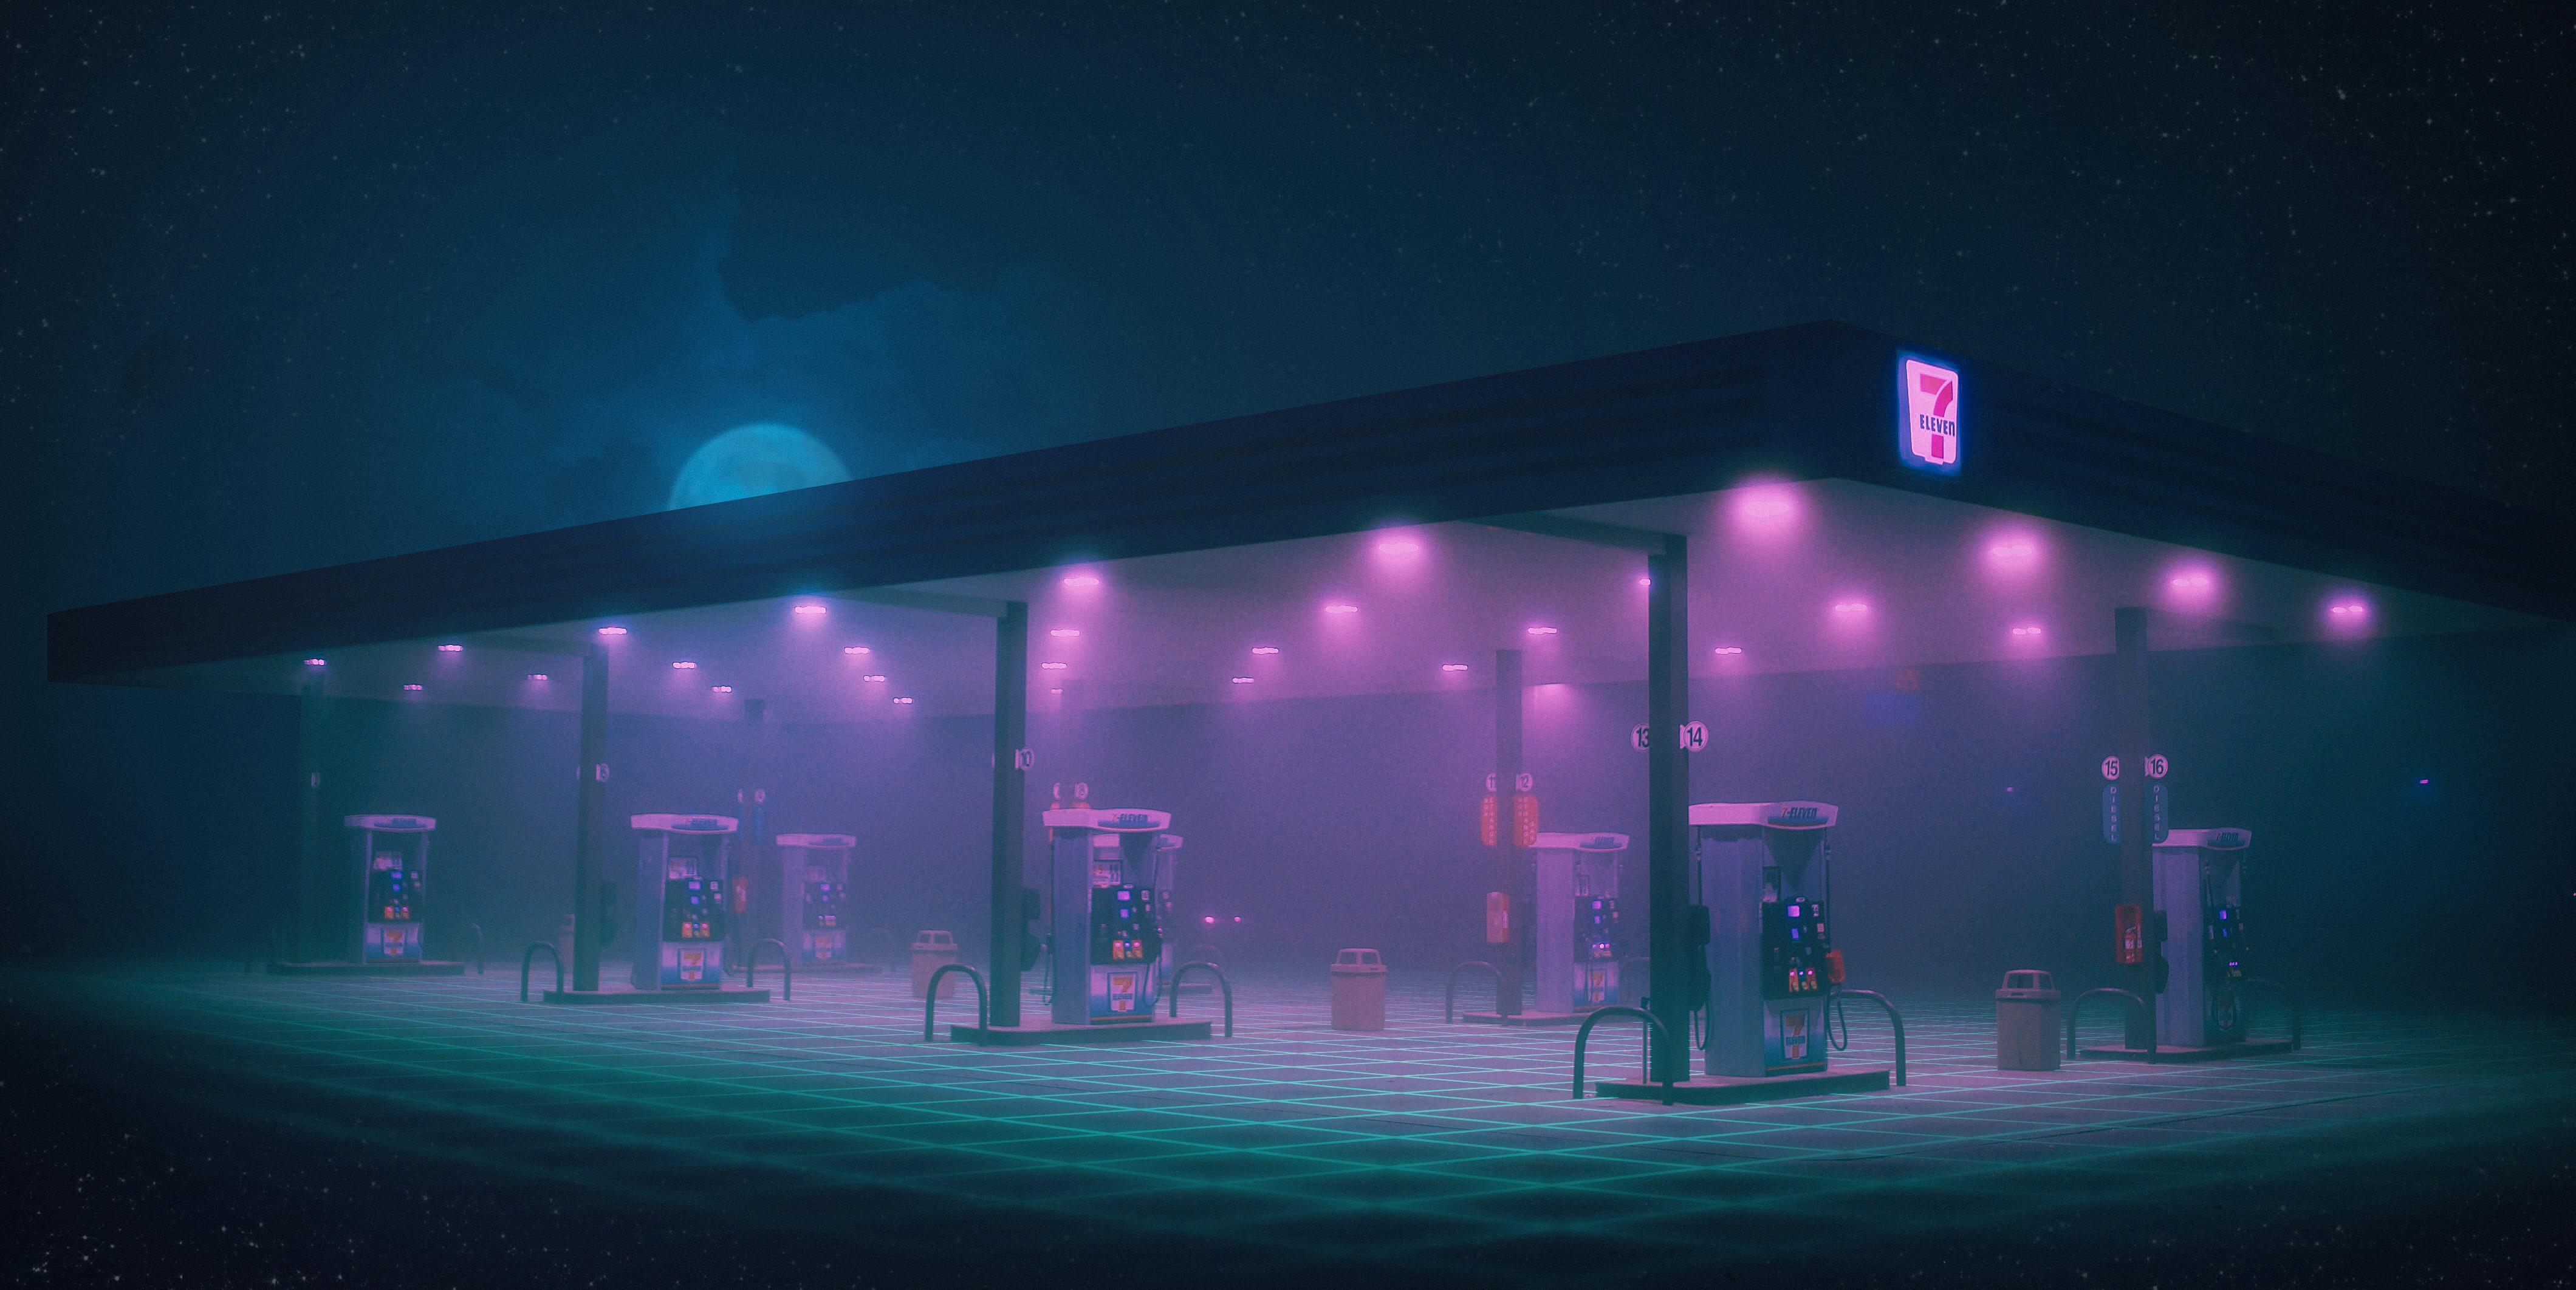 Gas Station Minimalist, HD Artist, 4k Wallpaper, Image